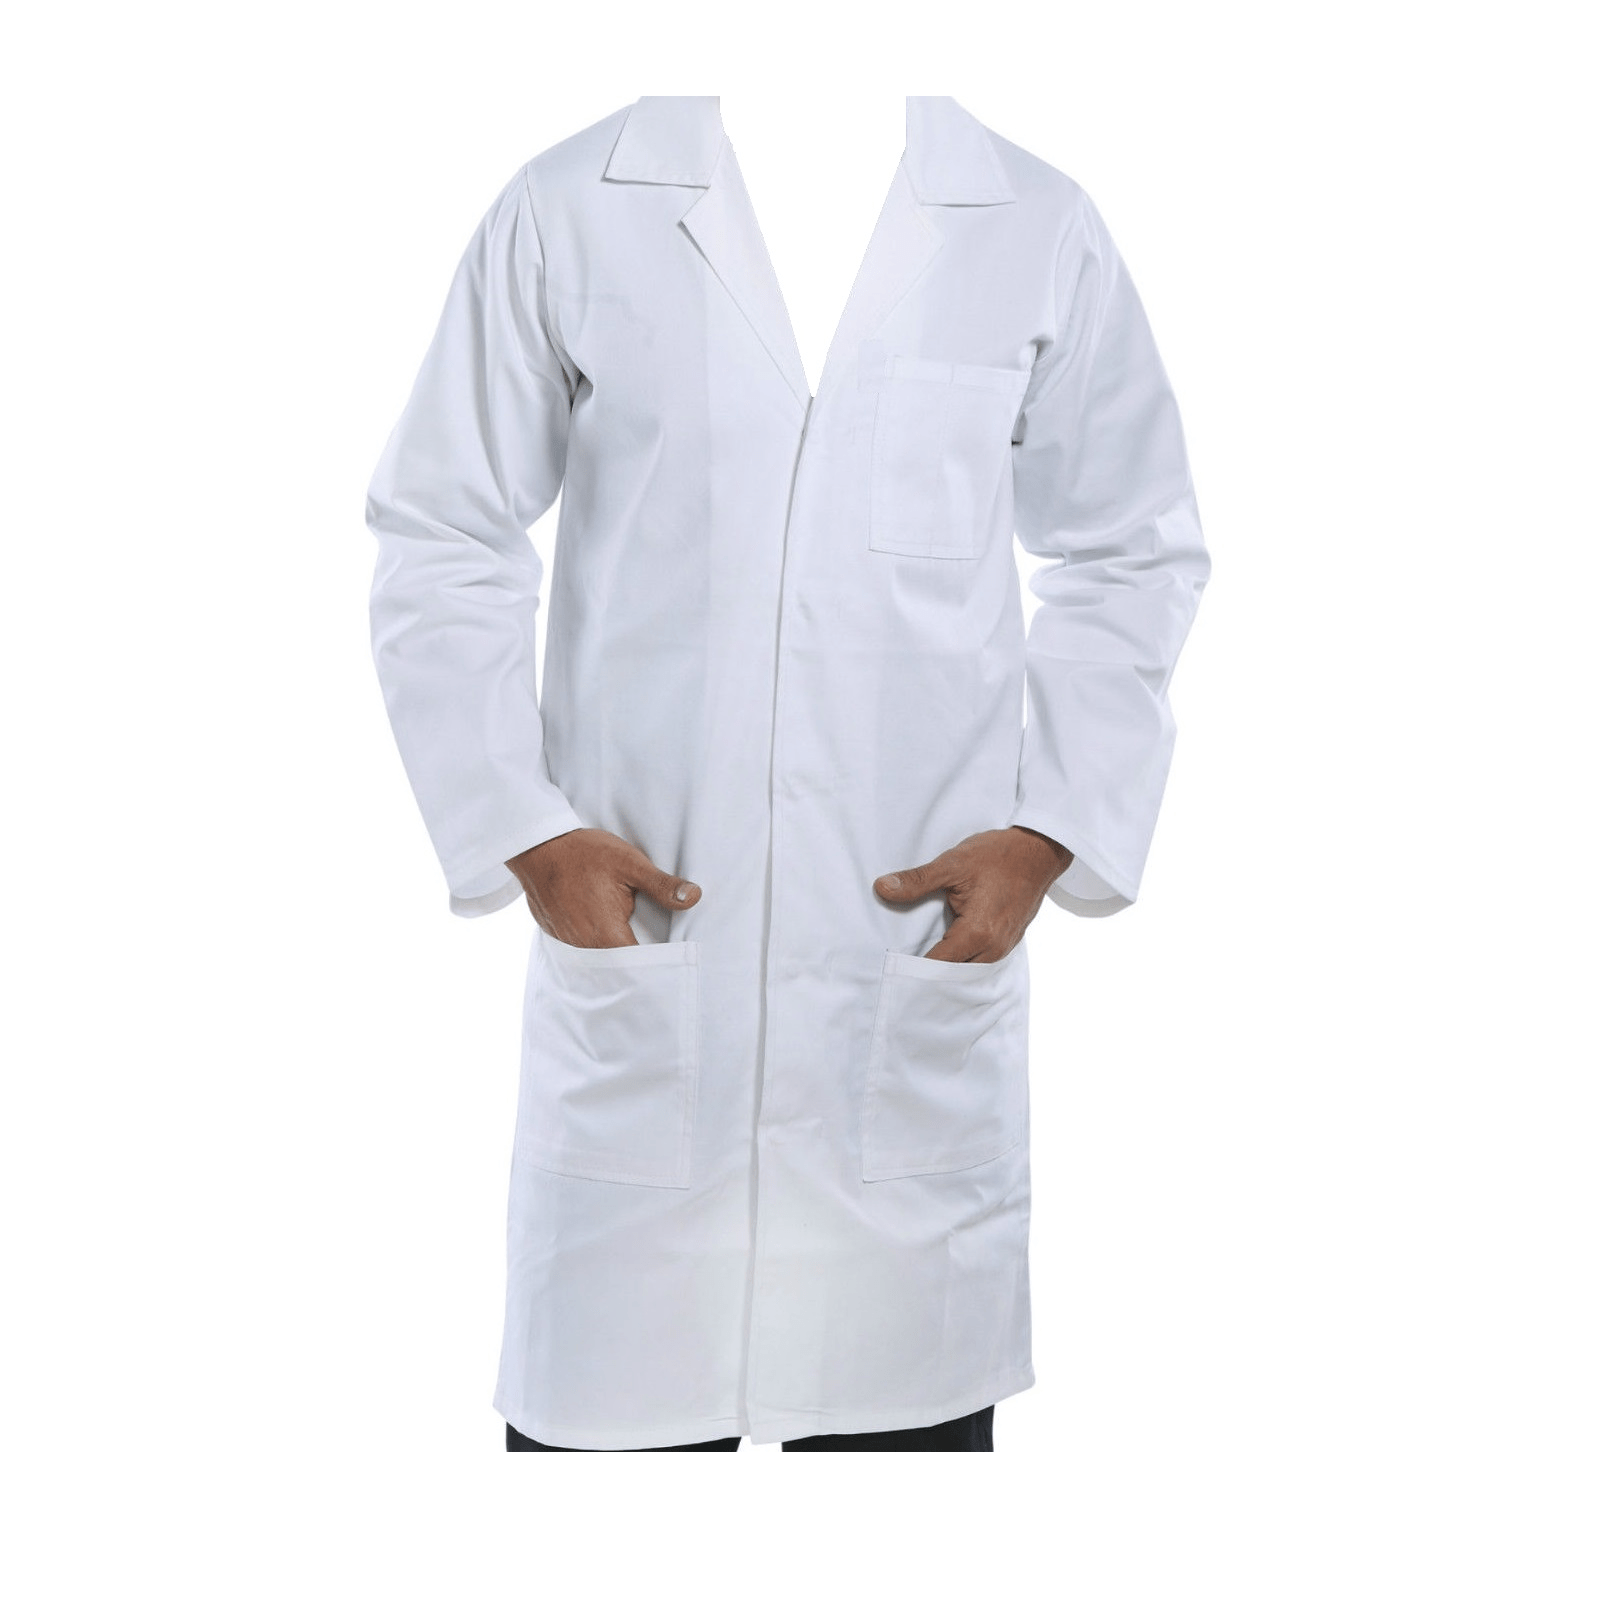 Unisex White Doctors Coat Medical Lab Industry Overall Pocket Nursing Jackets UK 